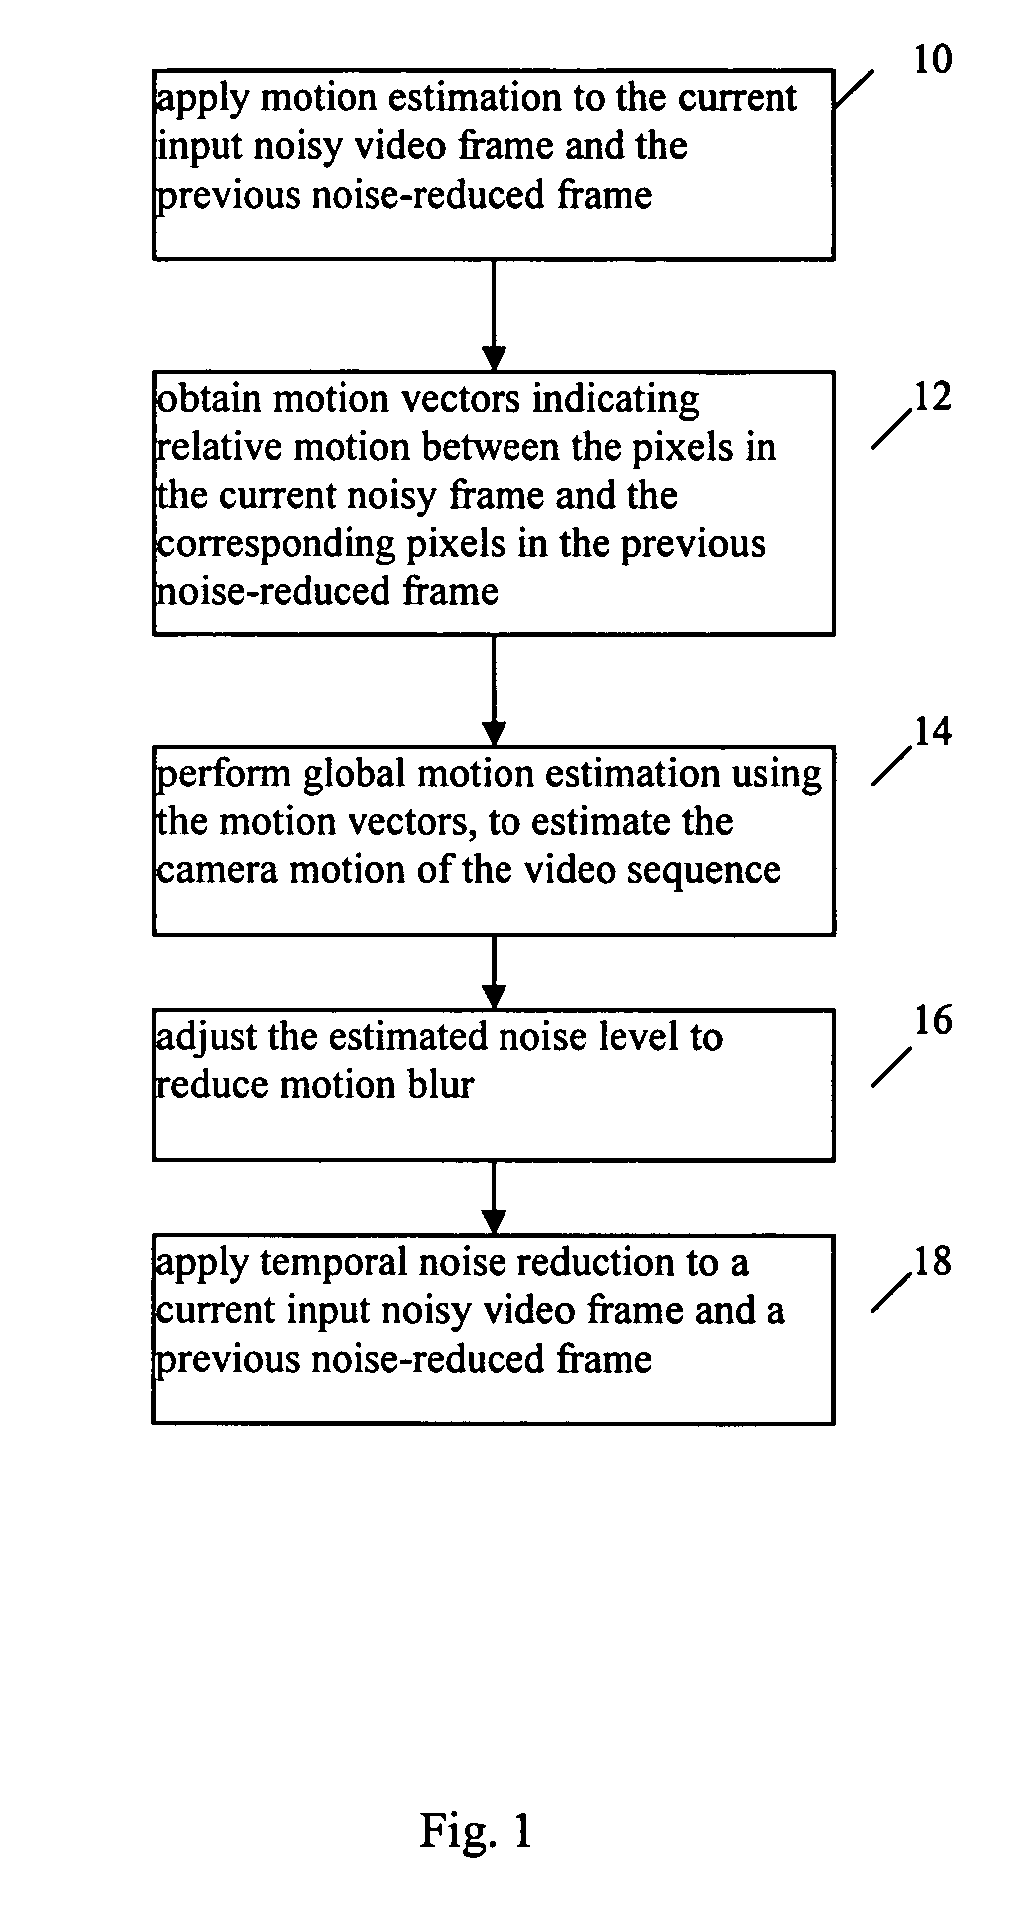 Methods for adaptive noise reduction based on global motion estimation